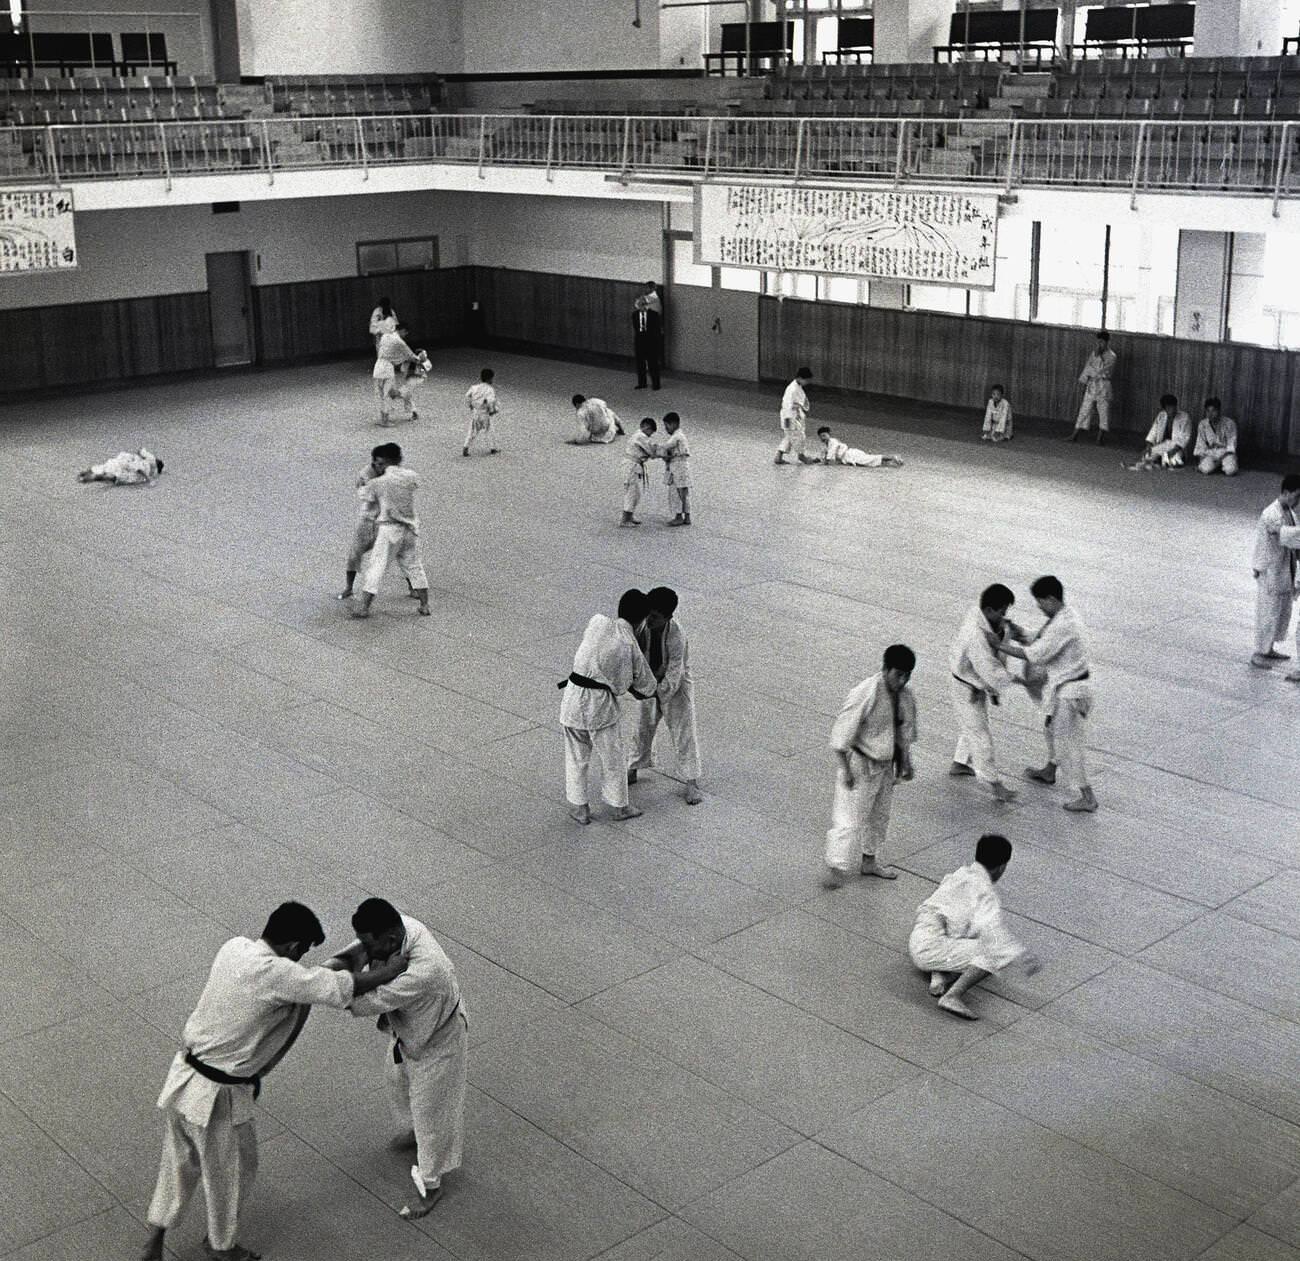 Japanese men doing judo training inside a large sports hall, 1950s.